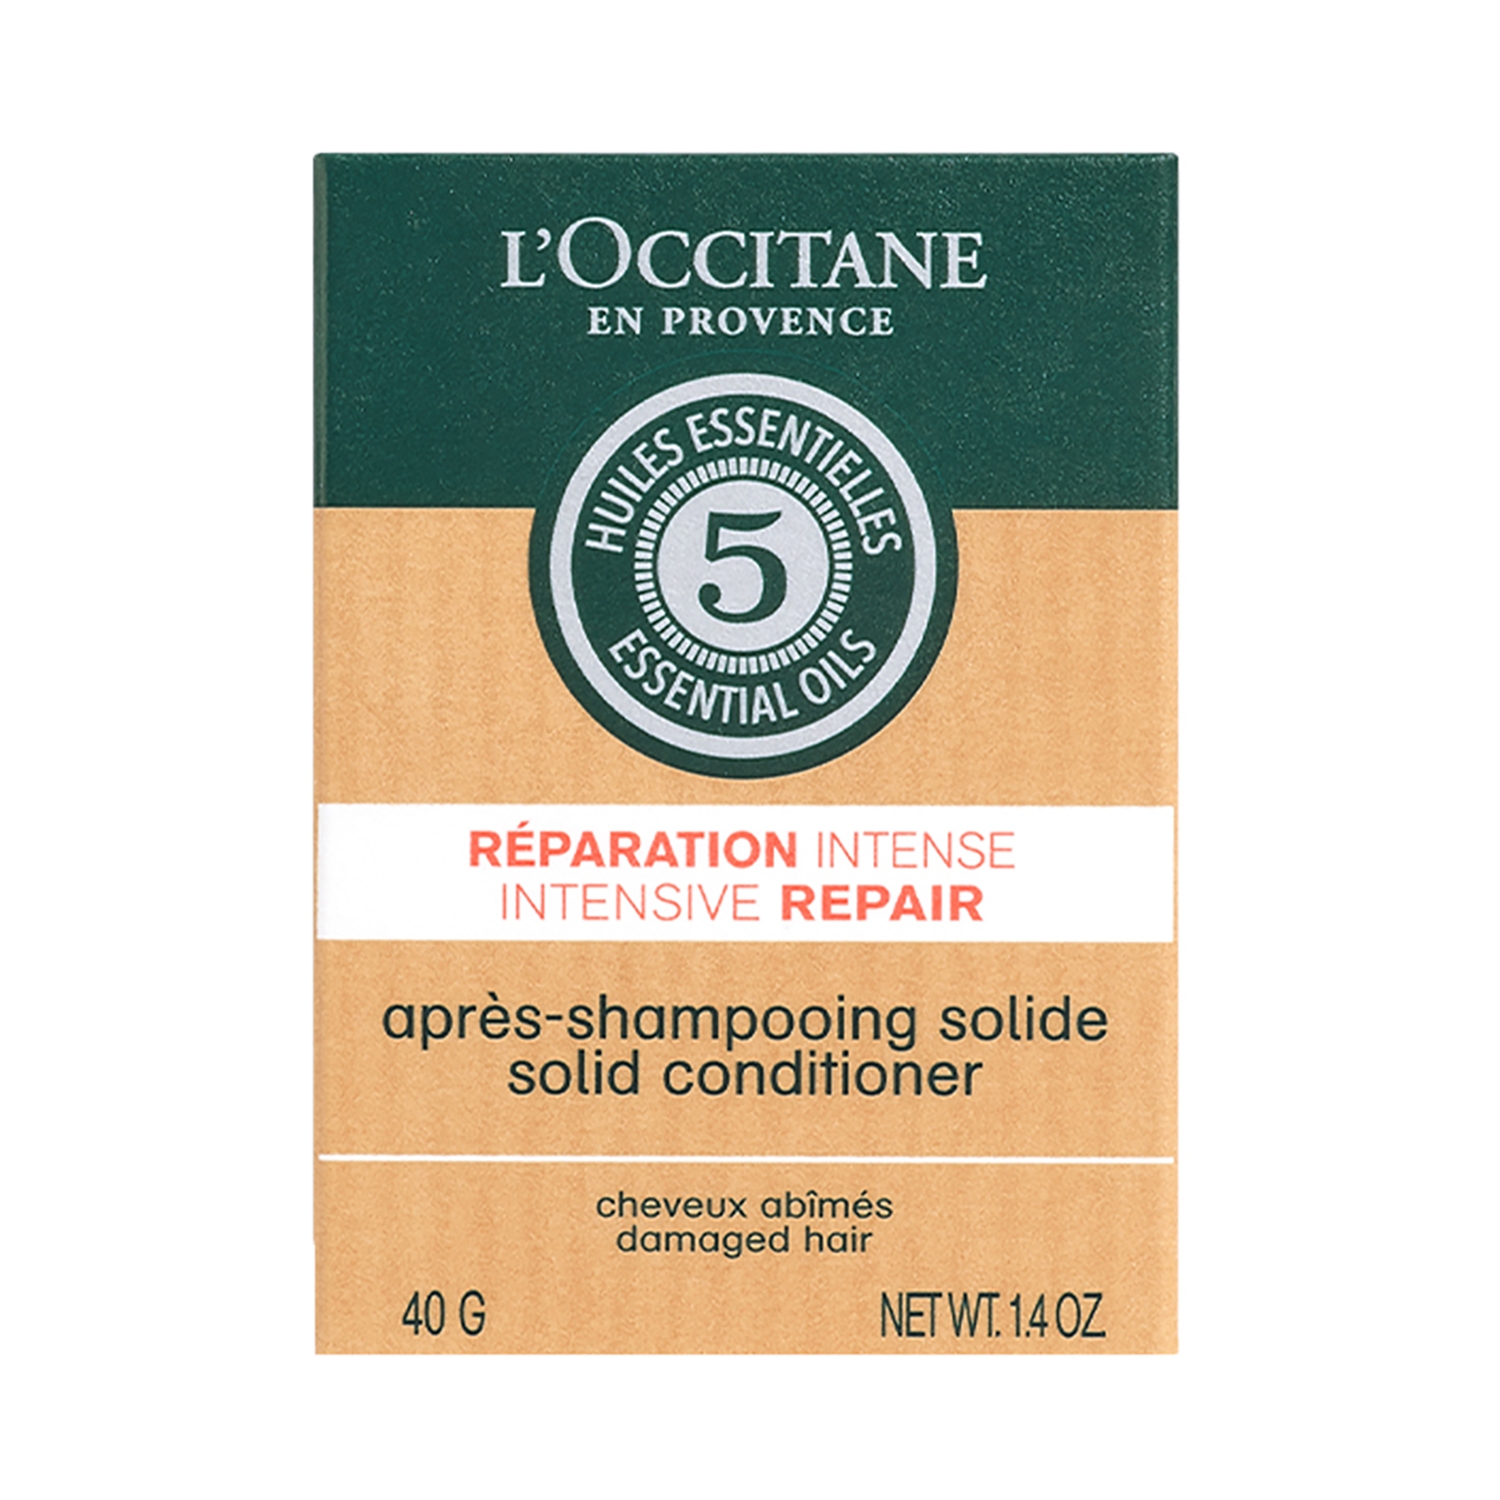 L'occitane | L'occitane Intensive Repair Solid Conditioner (40g)